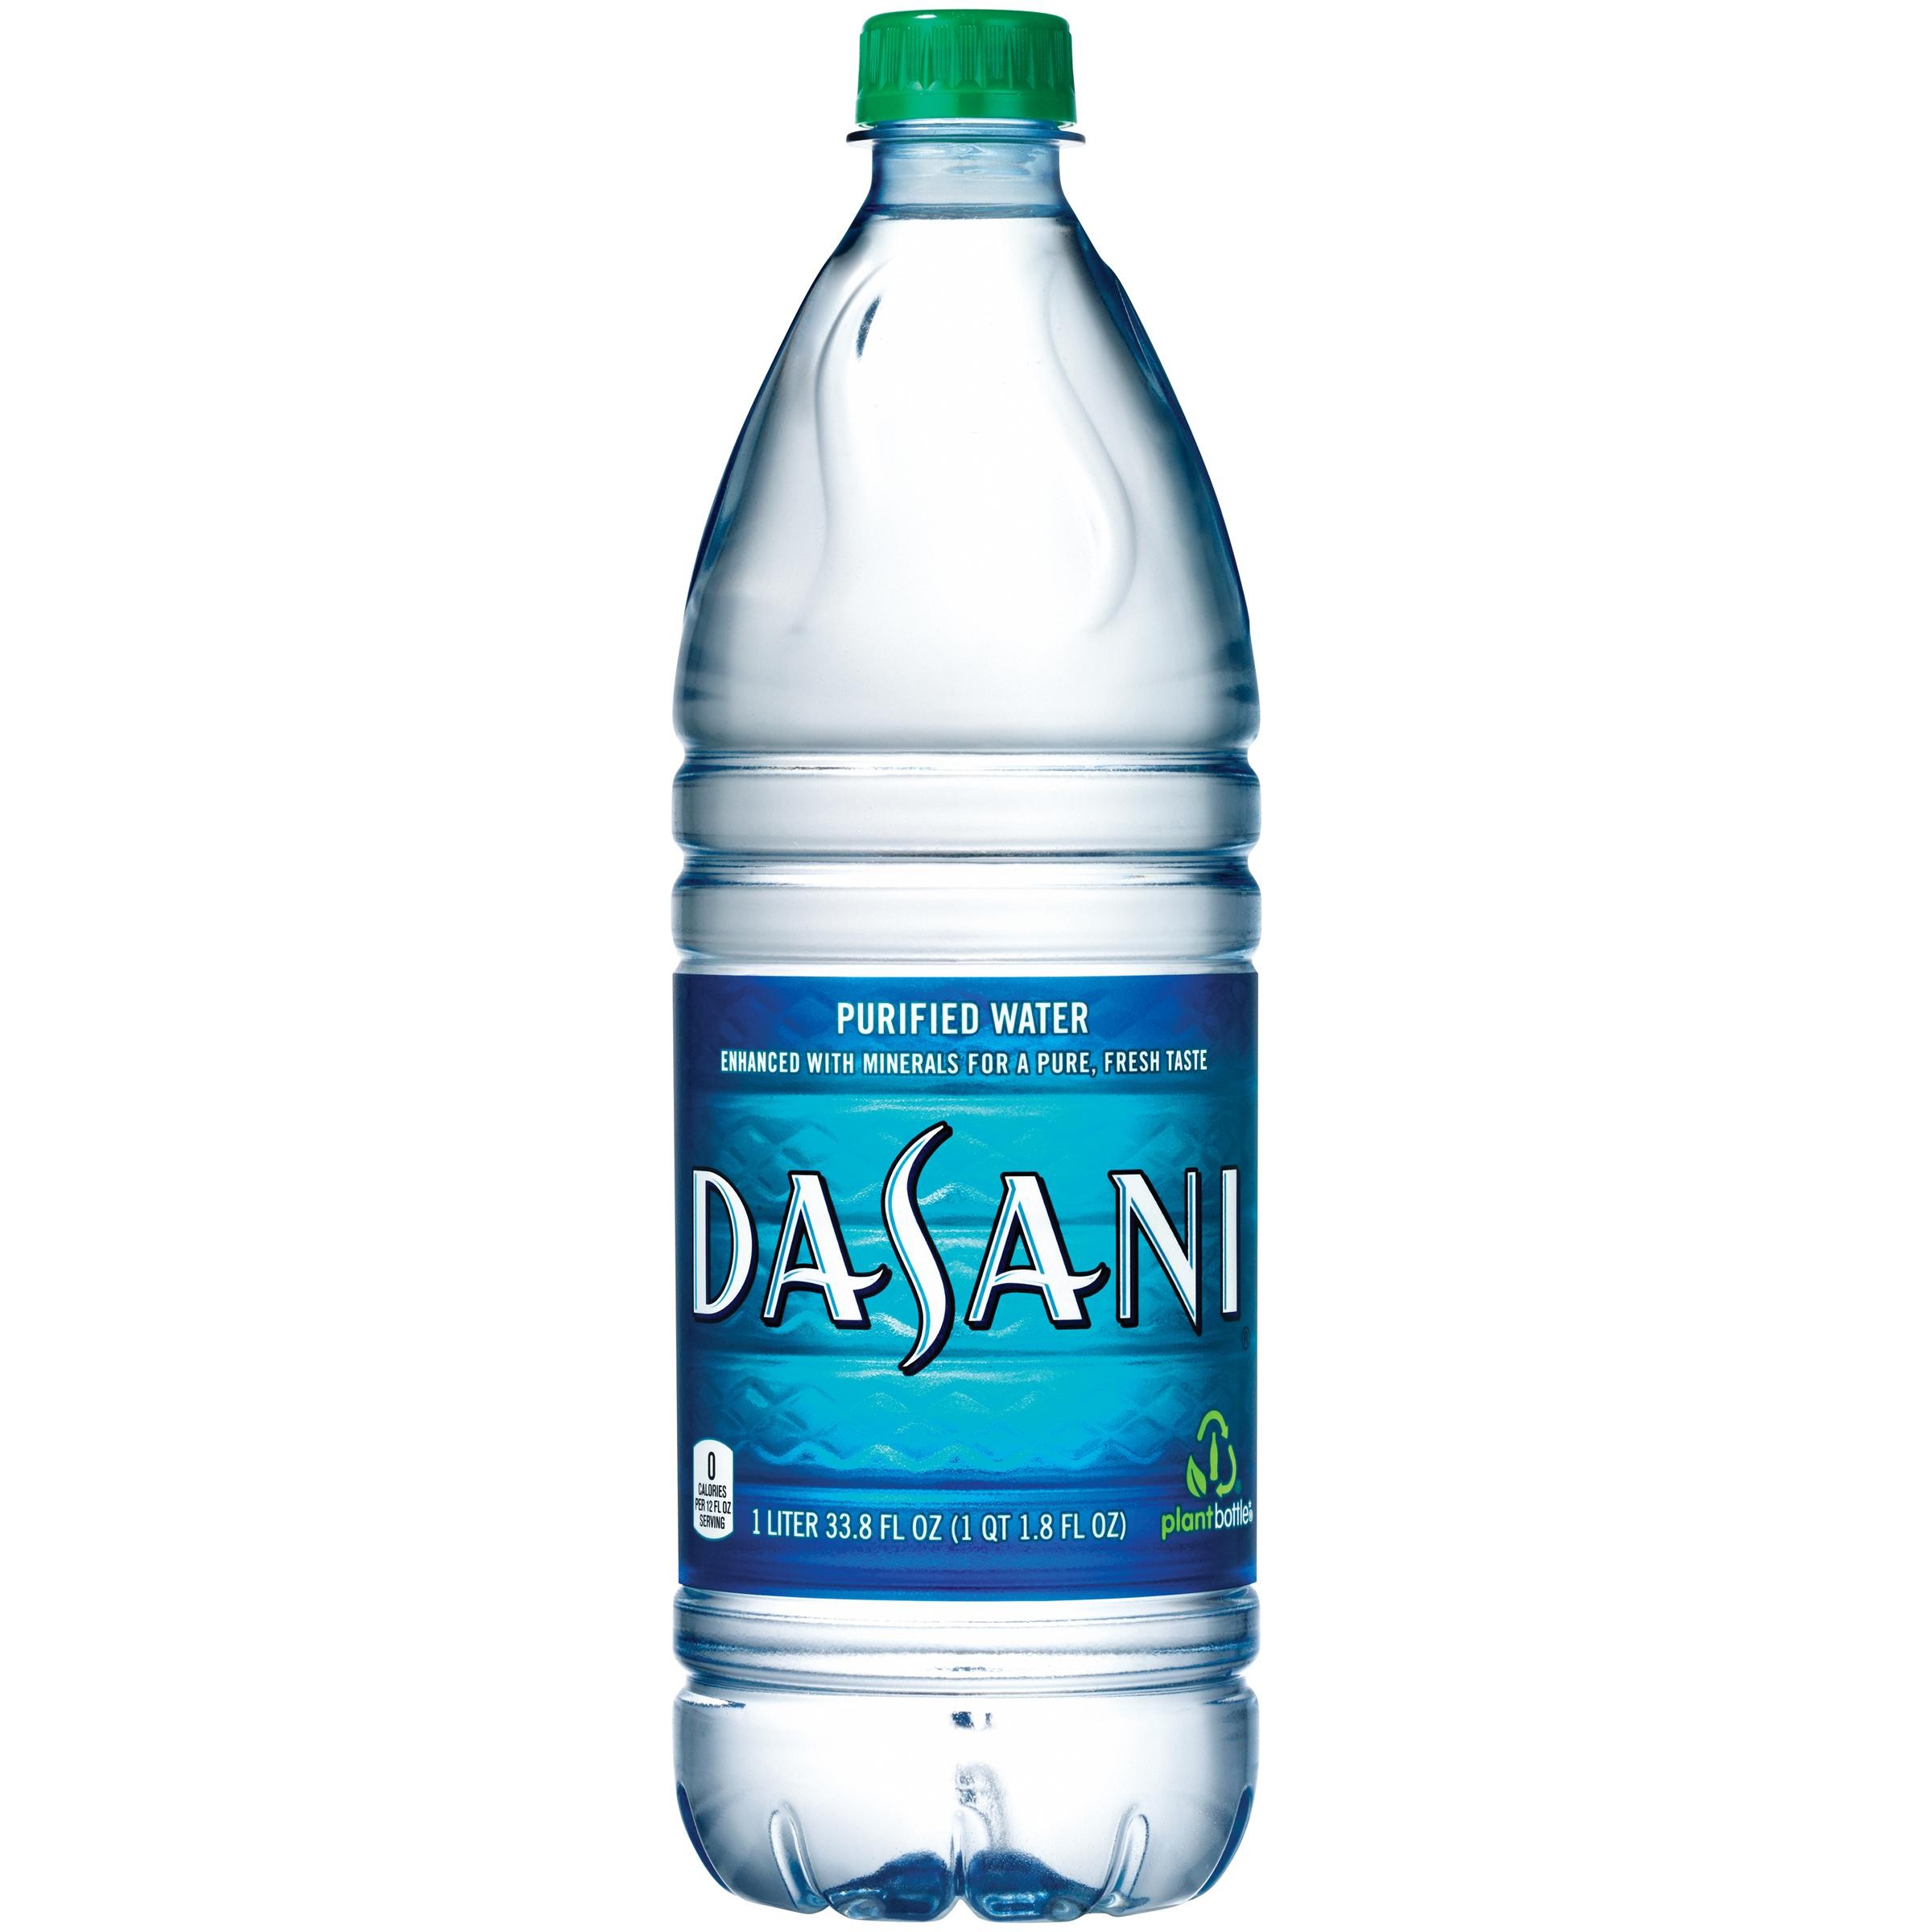 Dasani Purified Water Bottle Enhanced with Minerals, 1 Liter - 33.8 Oz